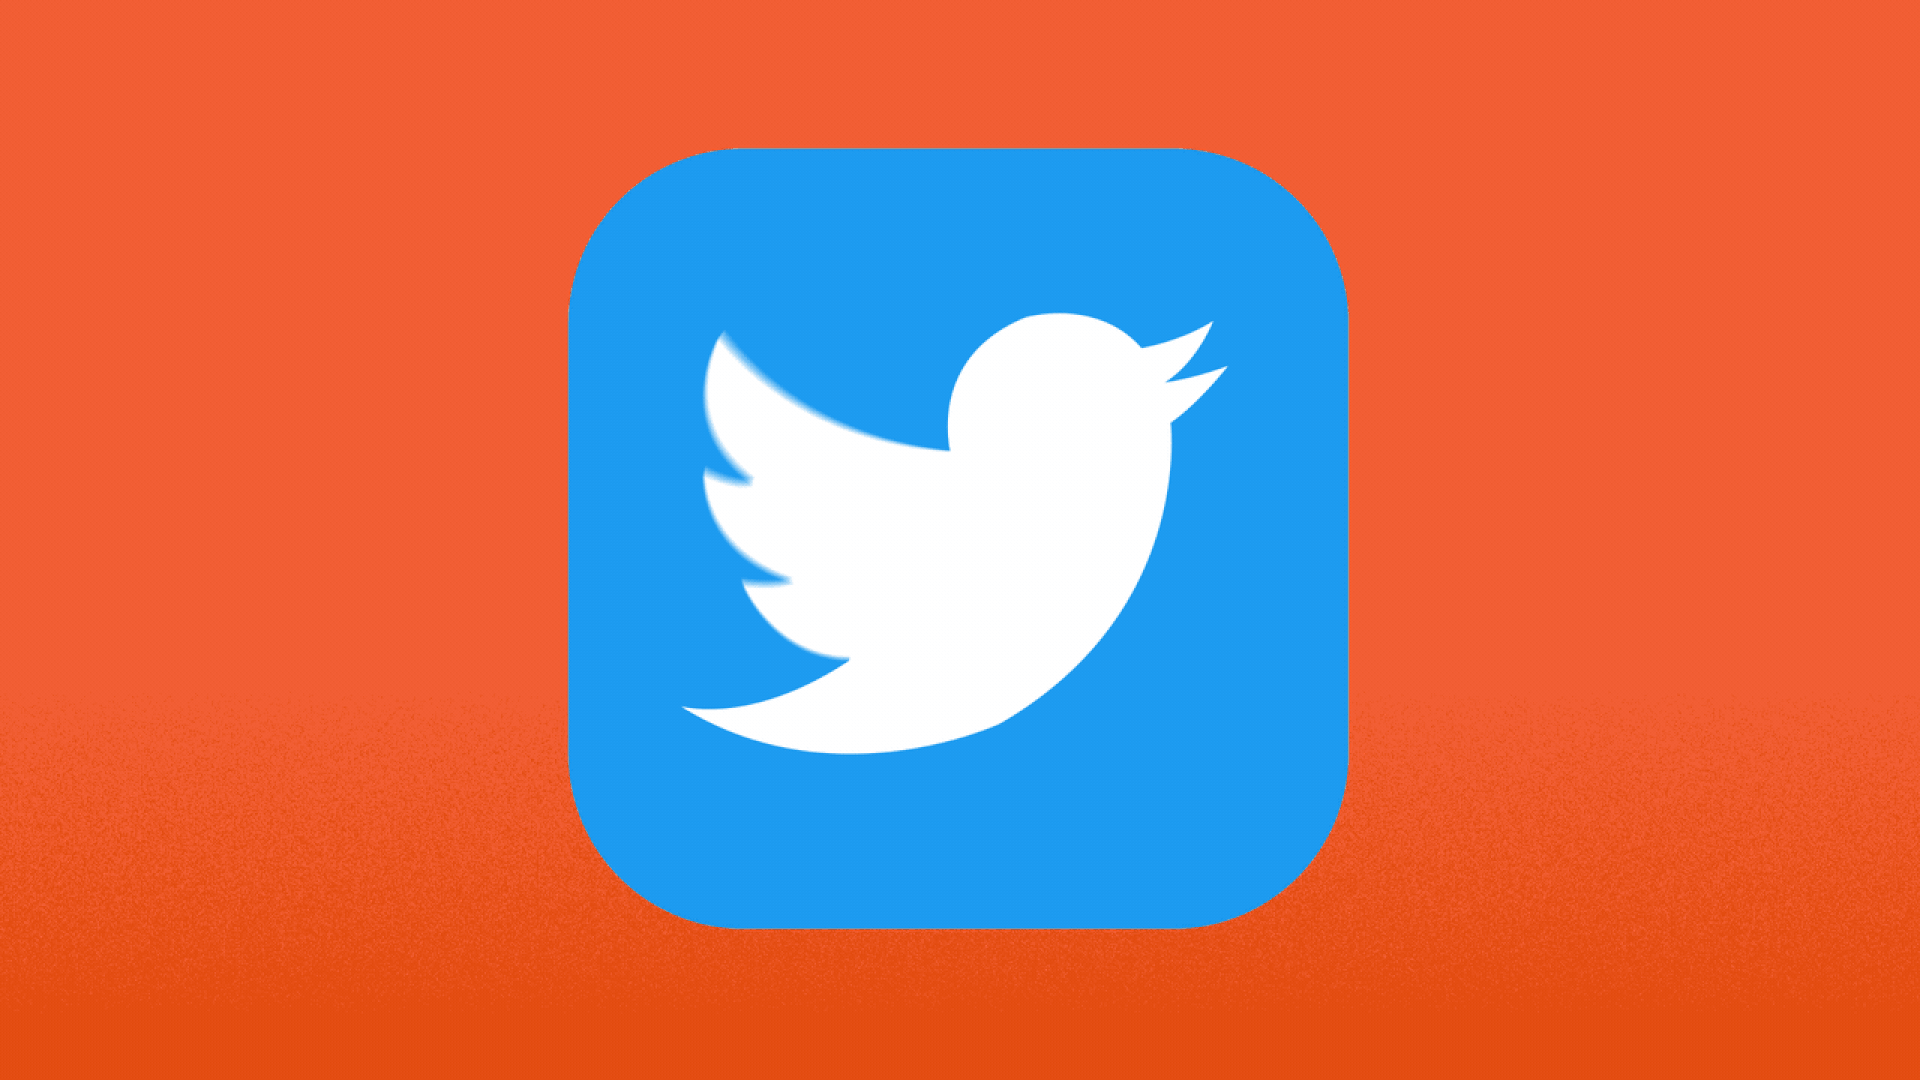 company-rebranding-examples-twitter-x-logo.gif